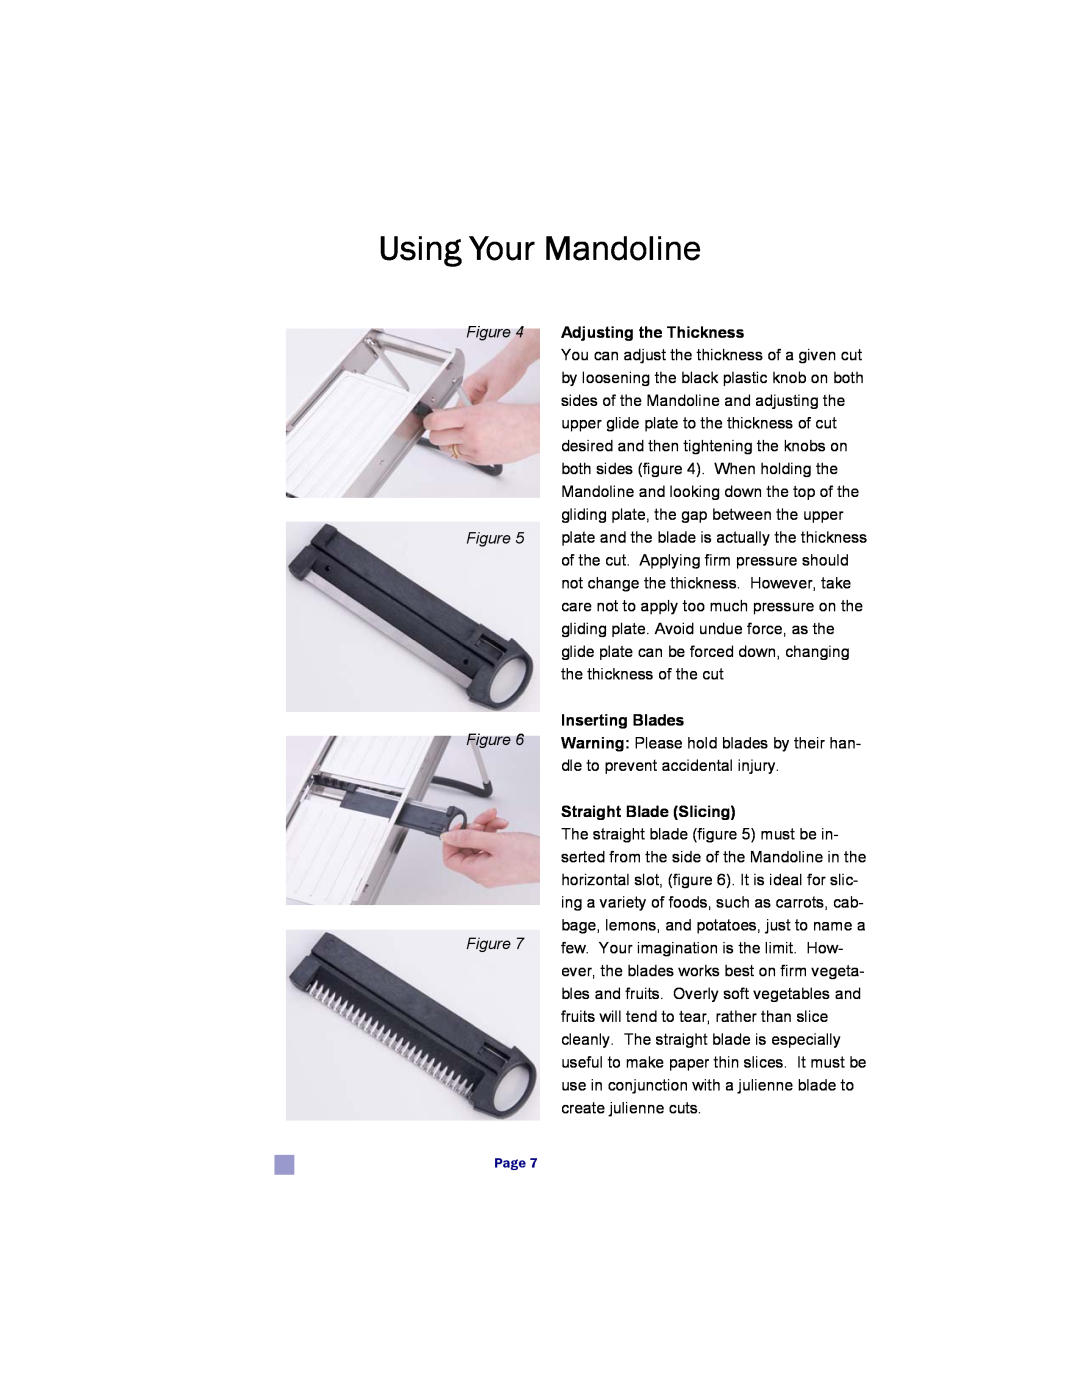 MIU France 90777 manual Using Your Mandoline, Adjusting the Thickness, Inserting Blades, Straight Blade Slicing 